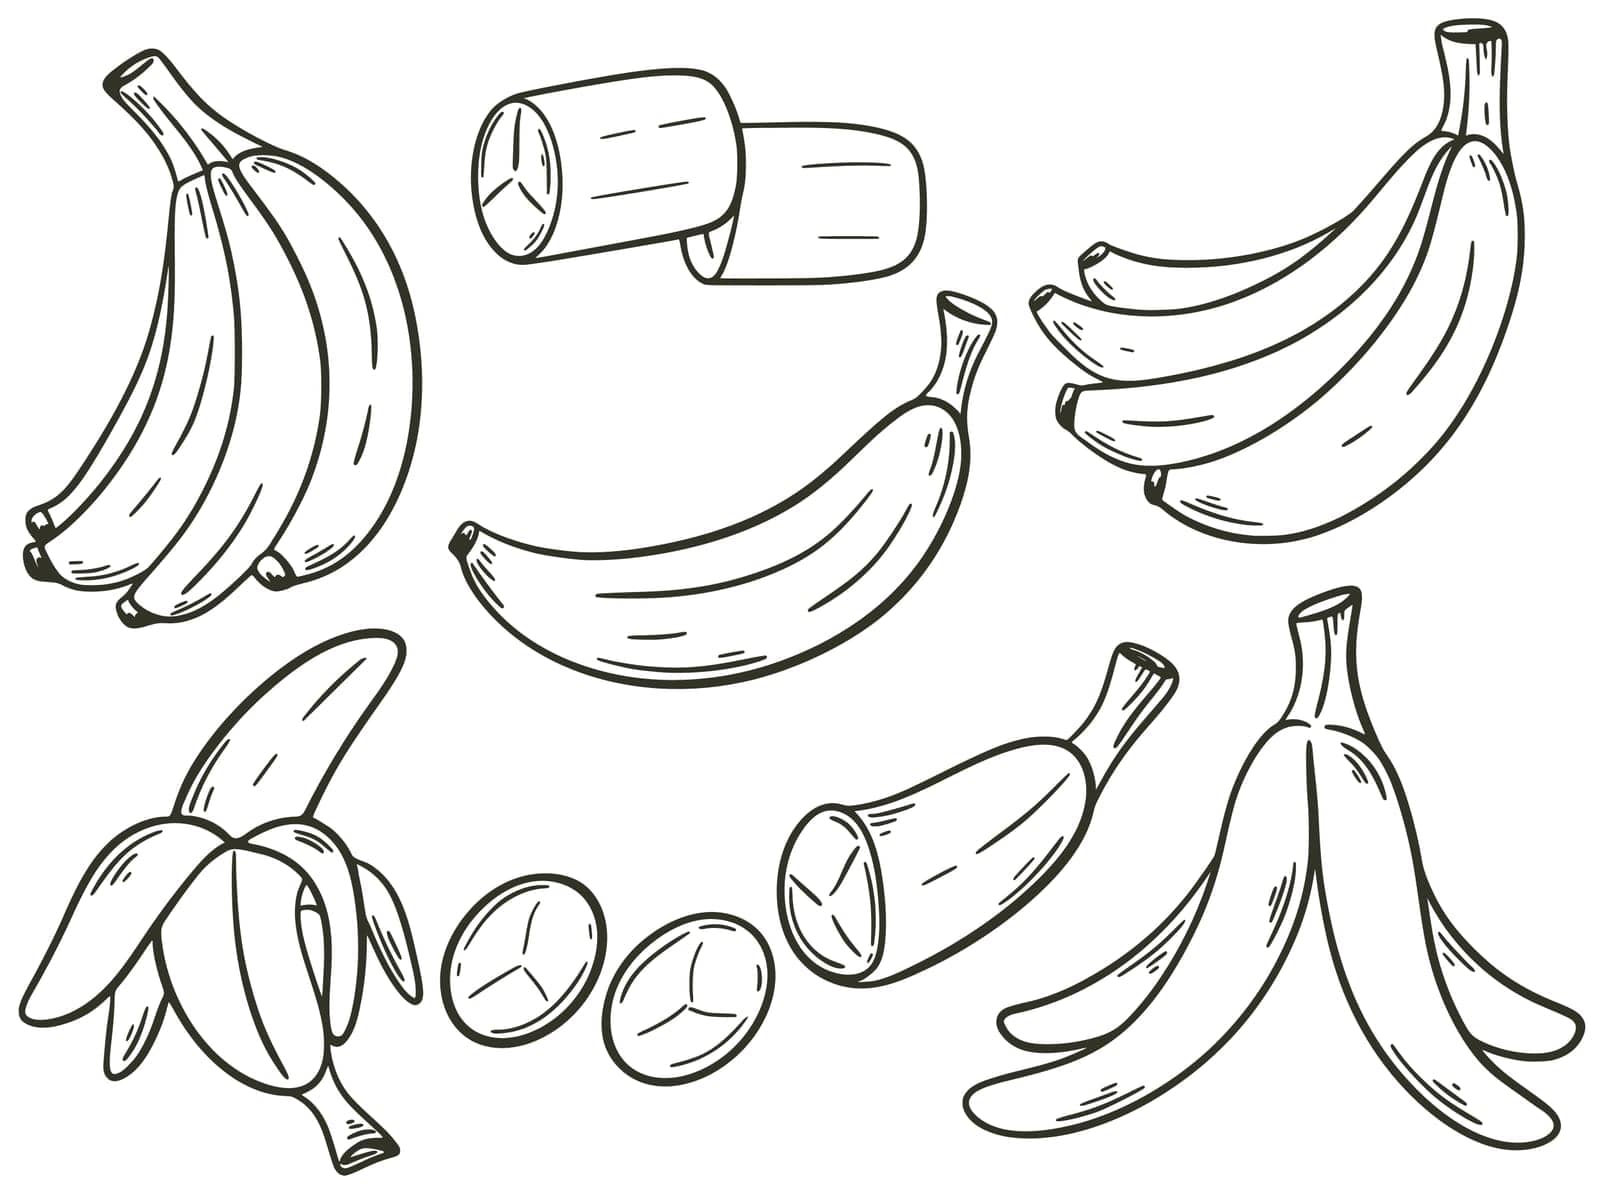 Bananas set hand engraving isolated vector illustration by TassiaK